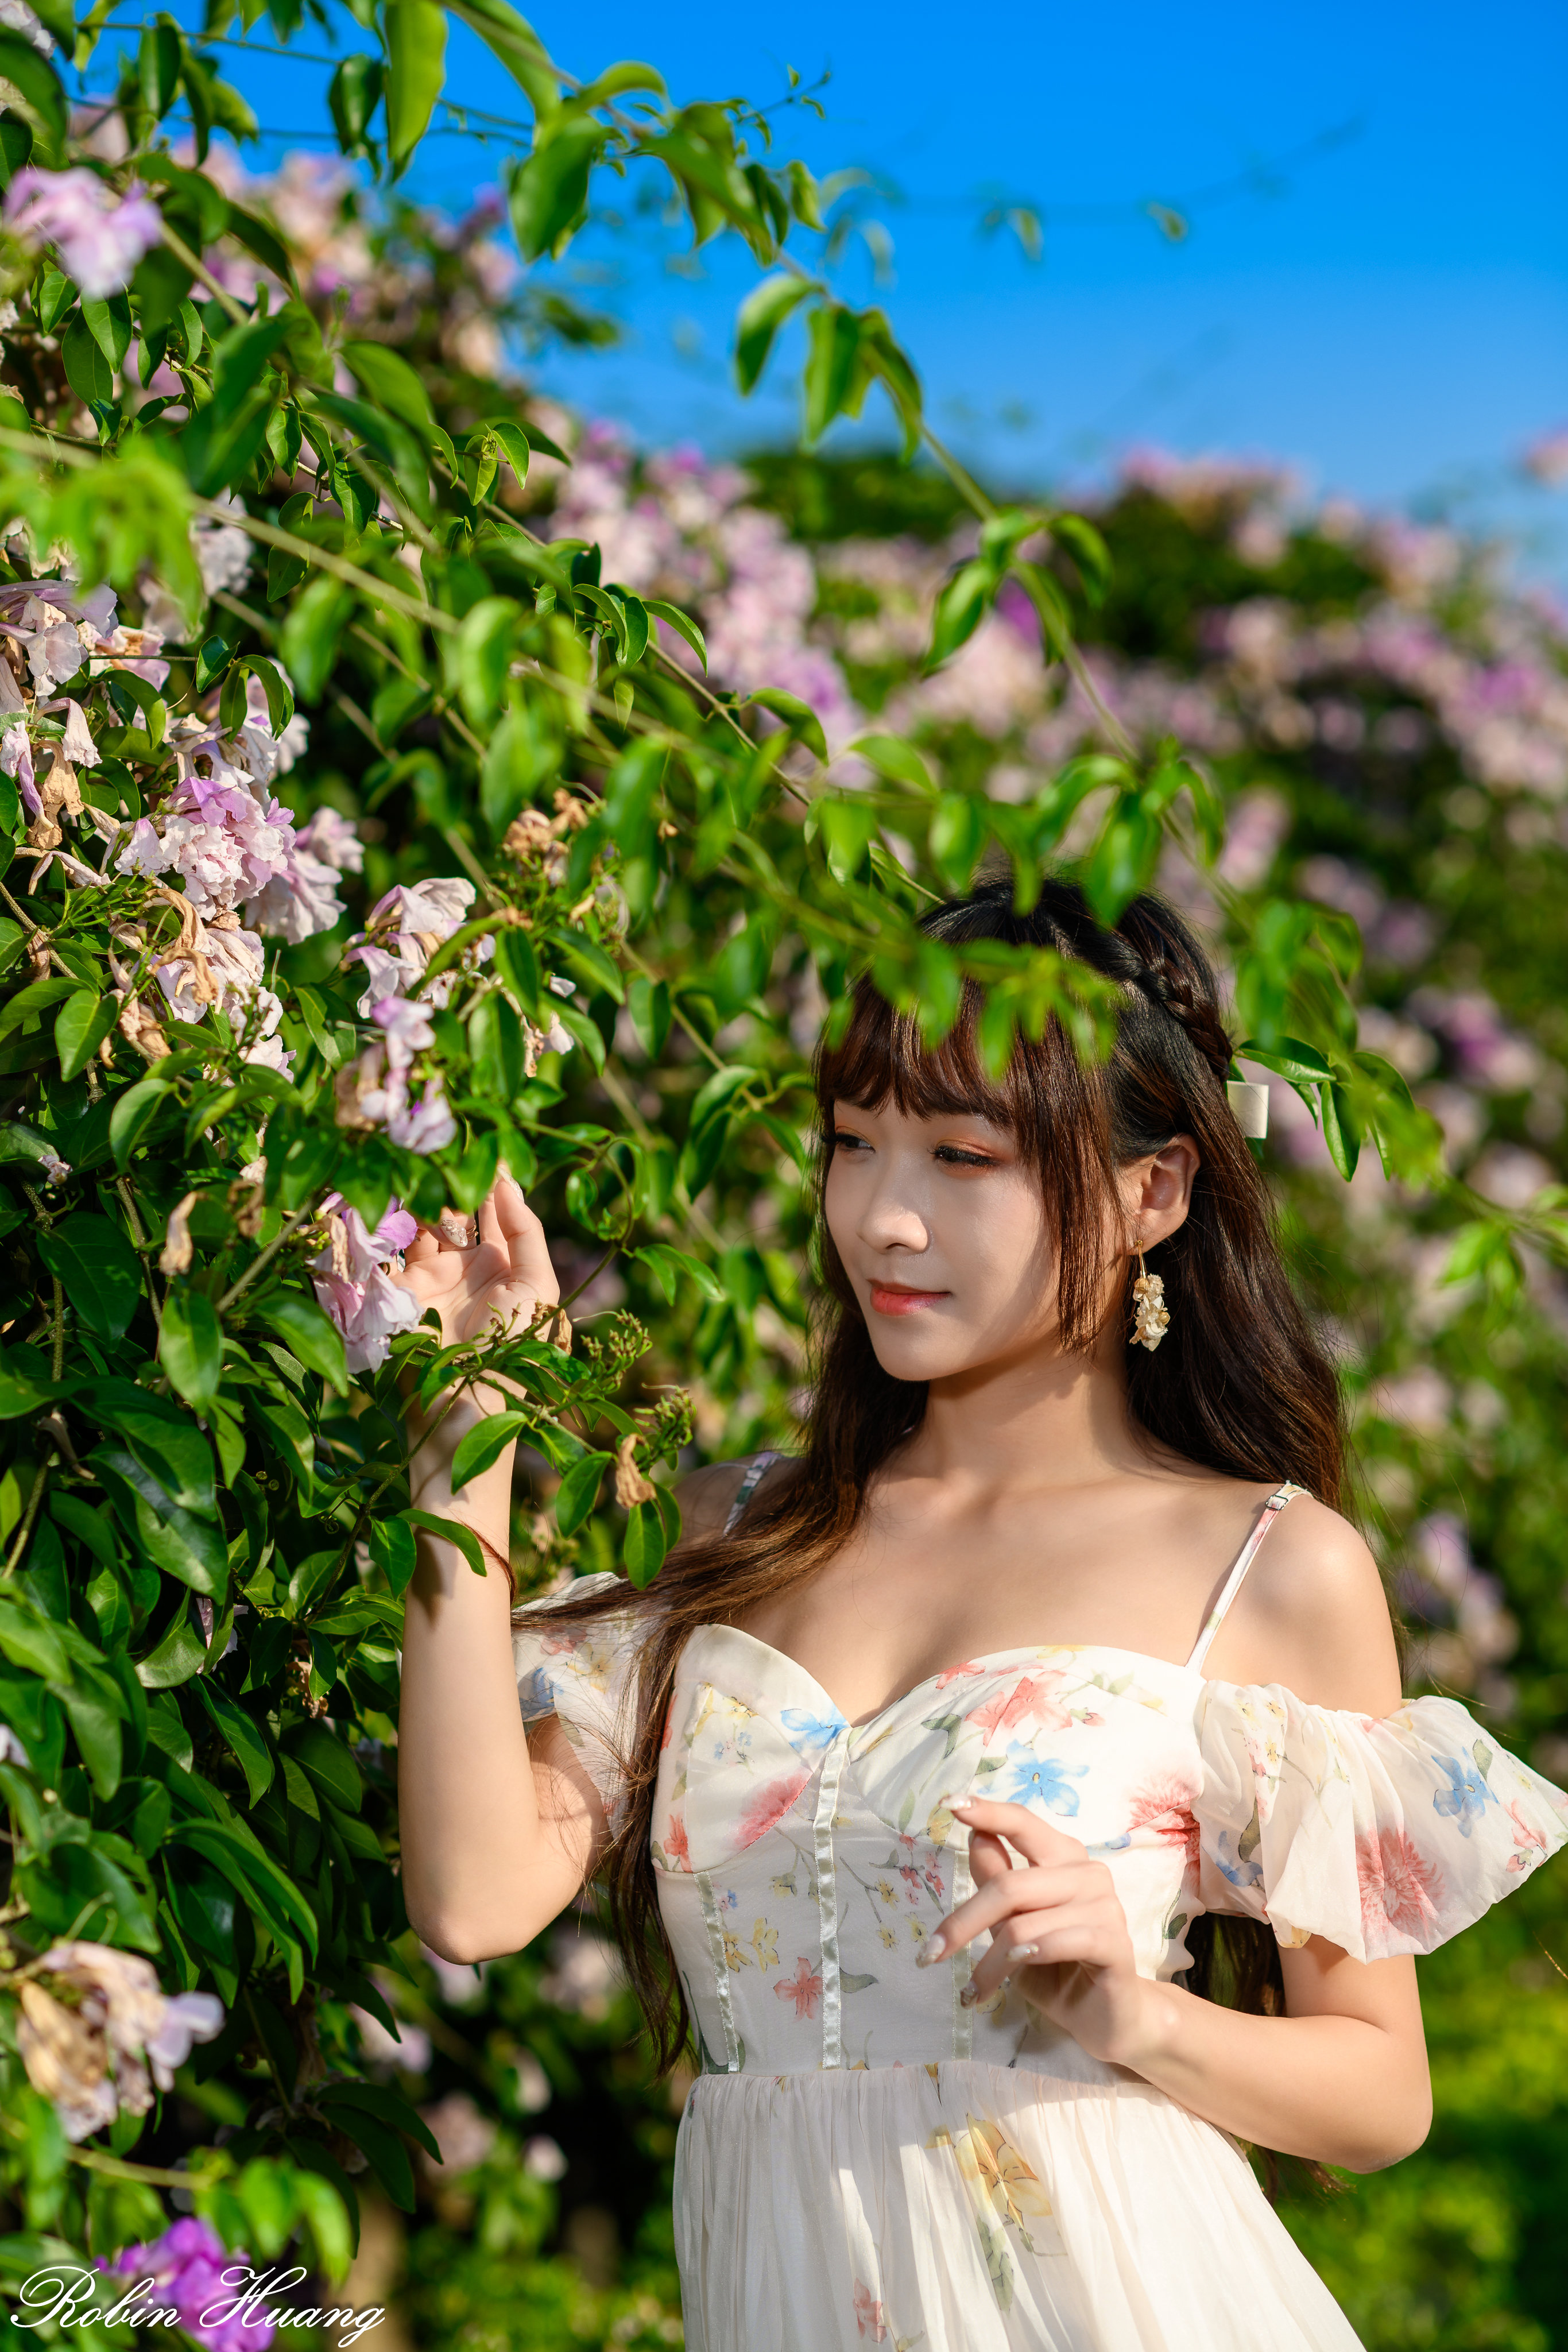 Robin Huang Women Asian Dress Flowers Clear Sky 2731x4096